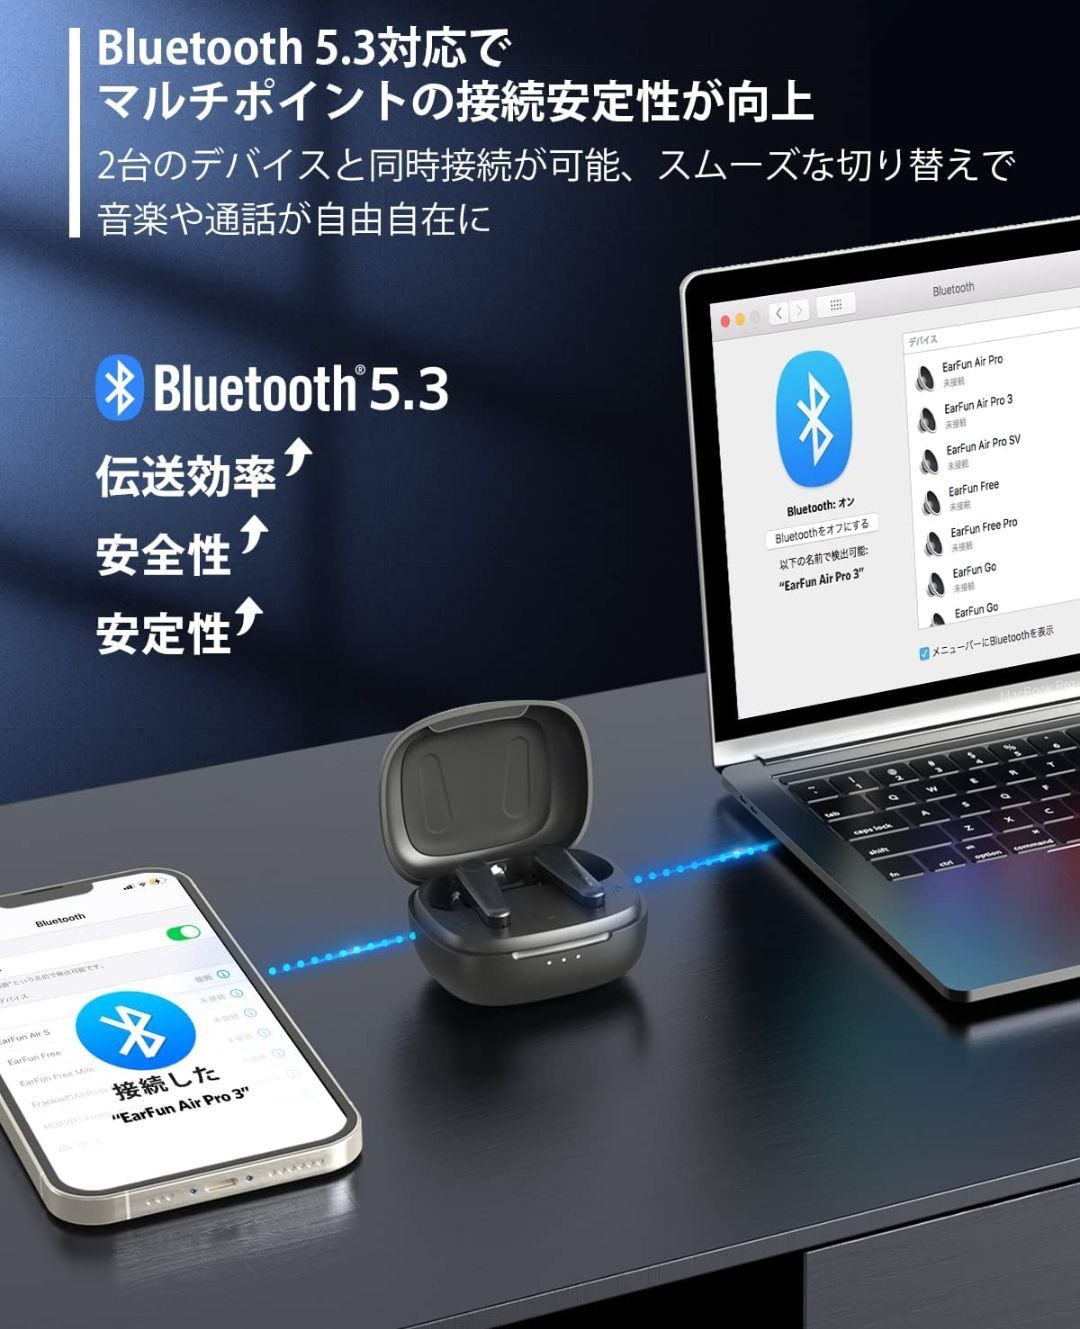 EarFun Air Pro 3 ワイヤレスイヤホン Bluetooth 5.3 - メルカリ